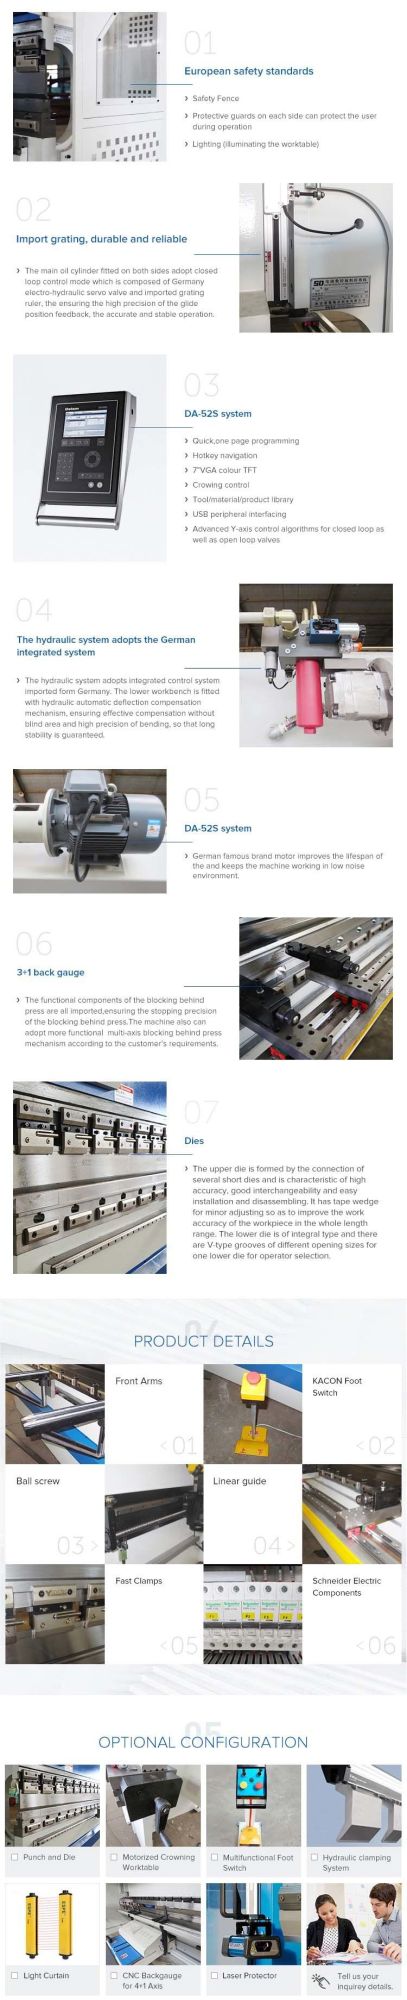 MB8 CNC Hydraulic Press Brake Machine Suppliers in China